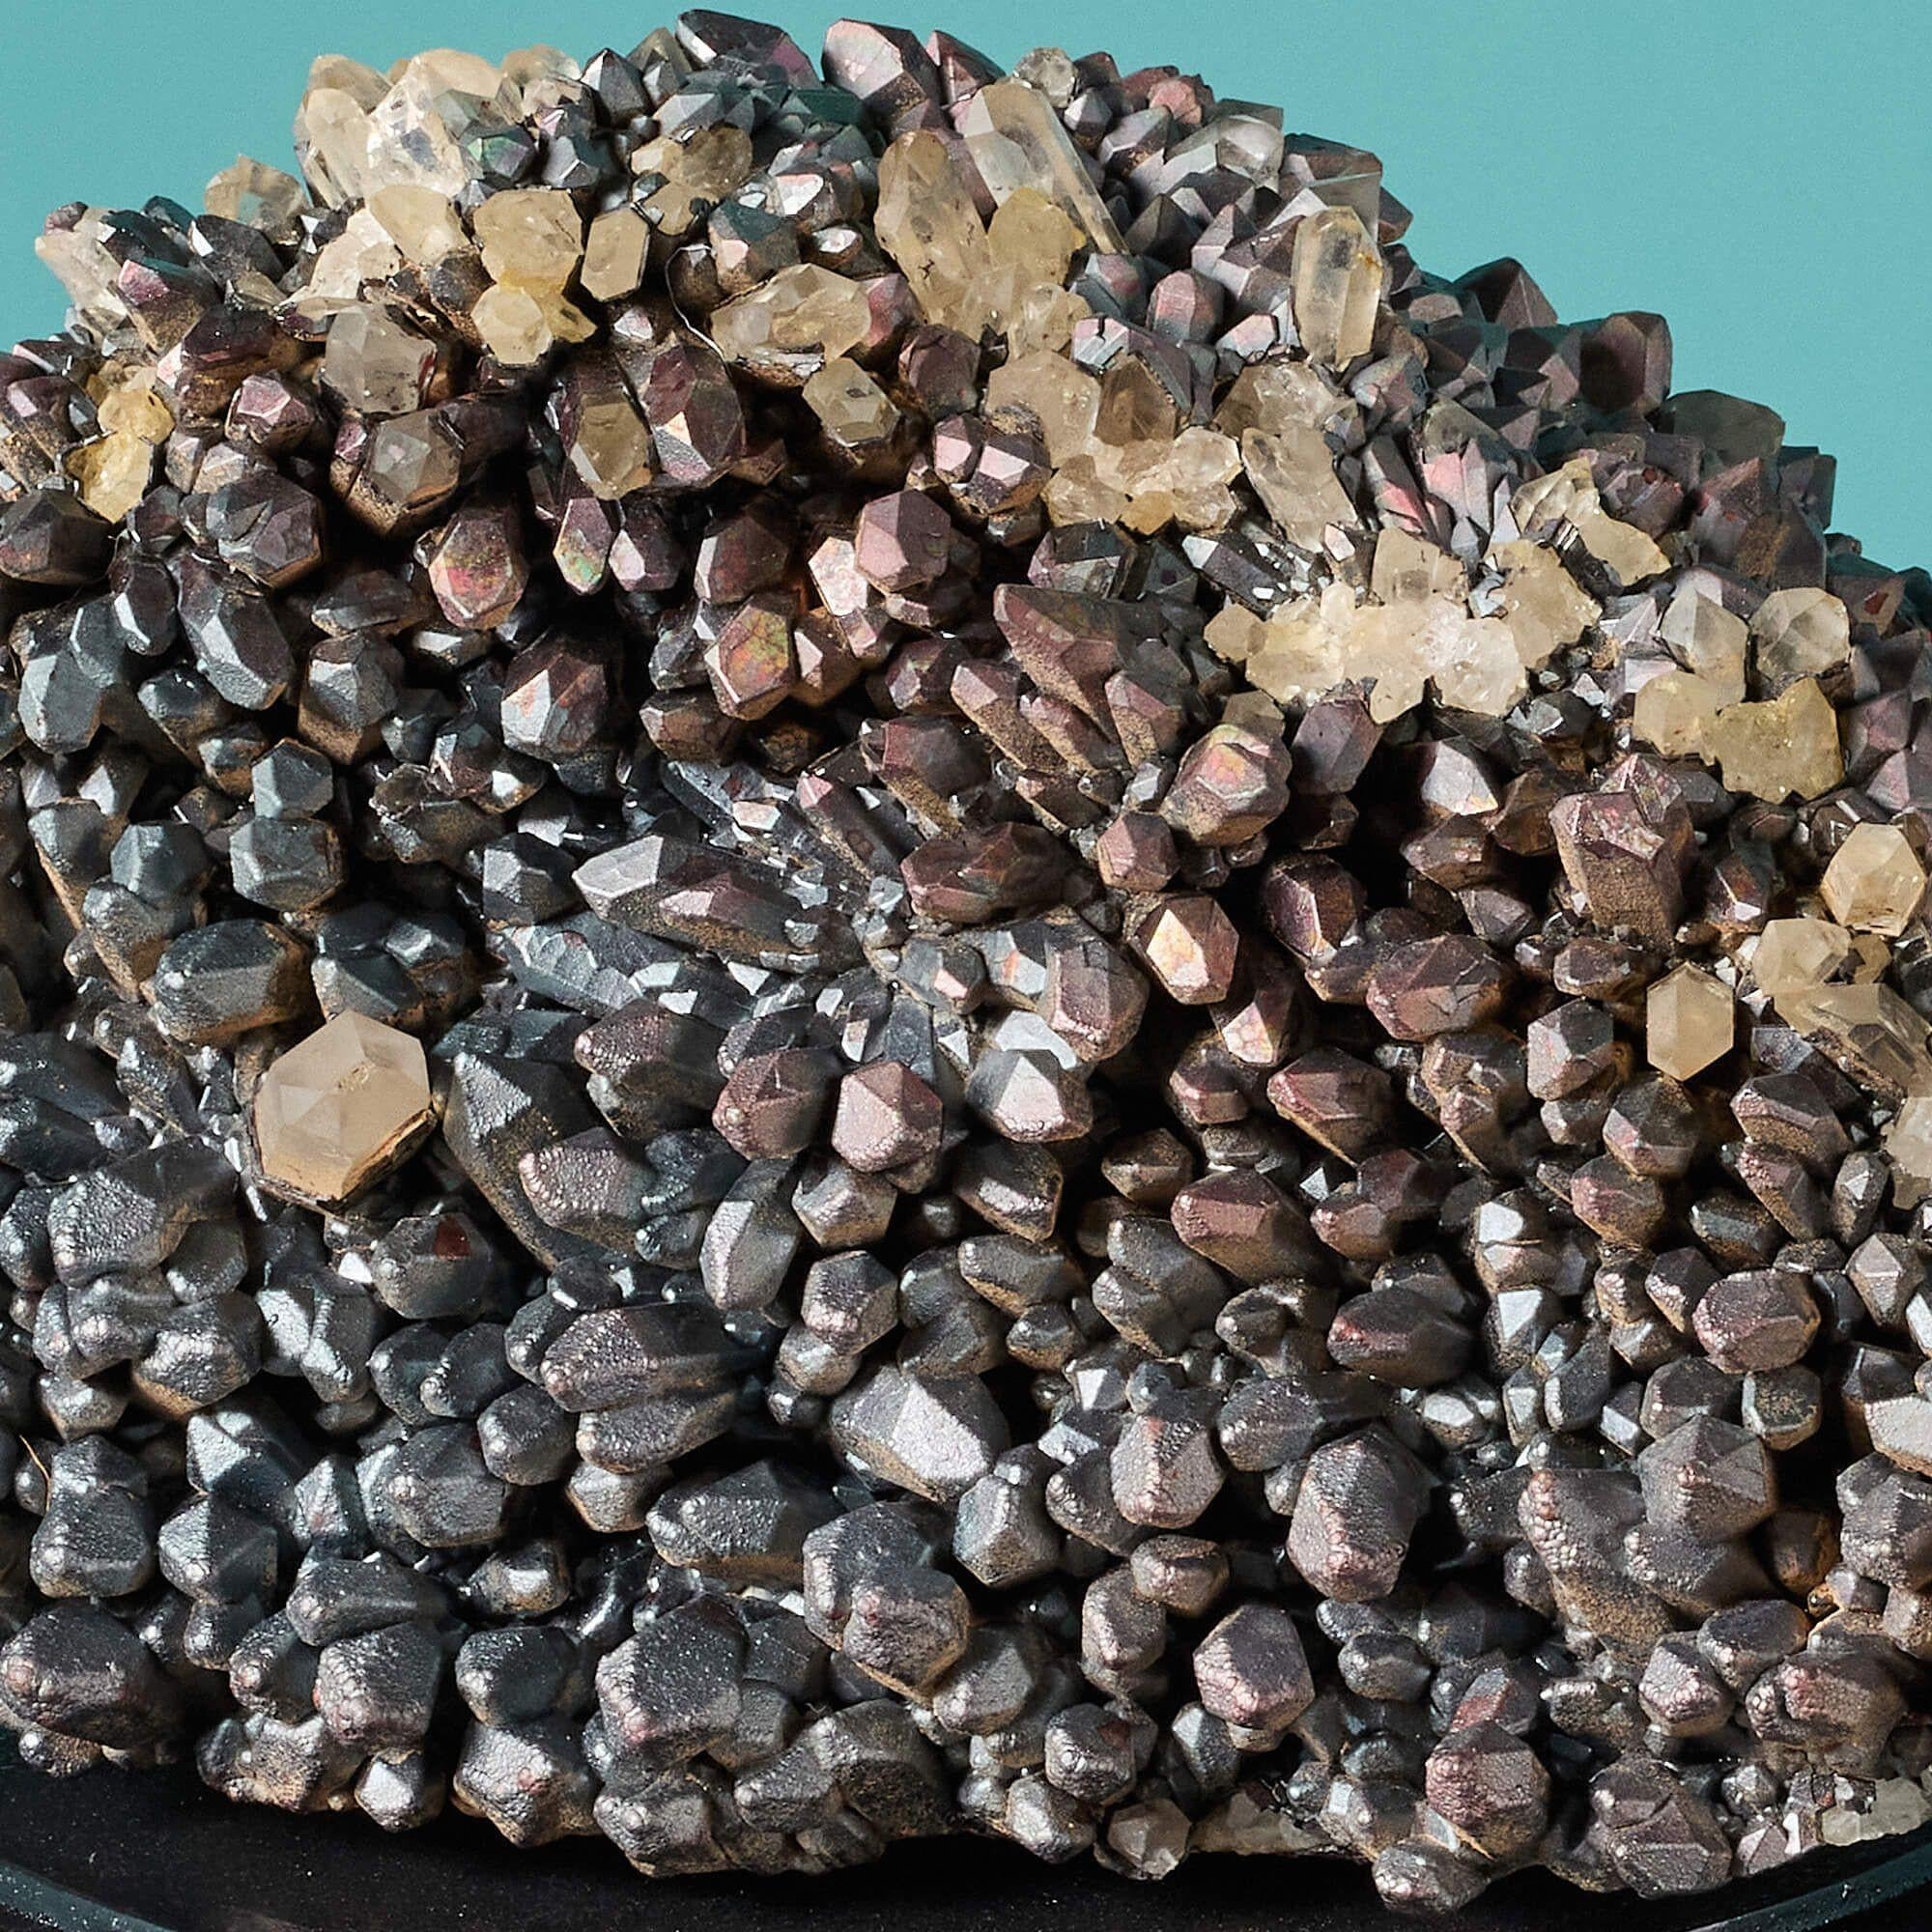 Malagasy Blacknite Quartz Cluster Specimen For Sale